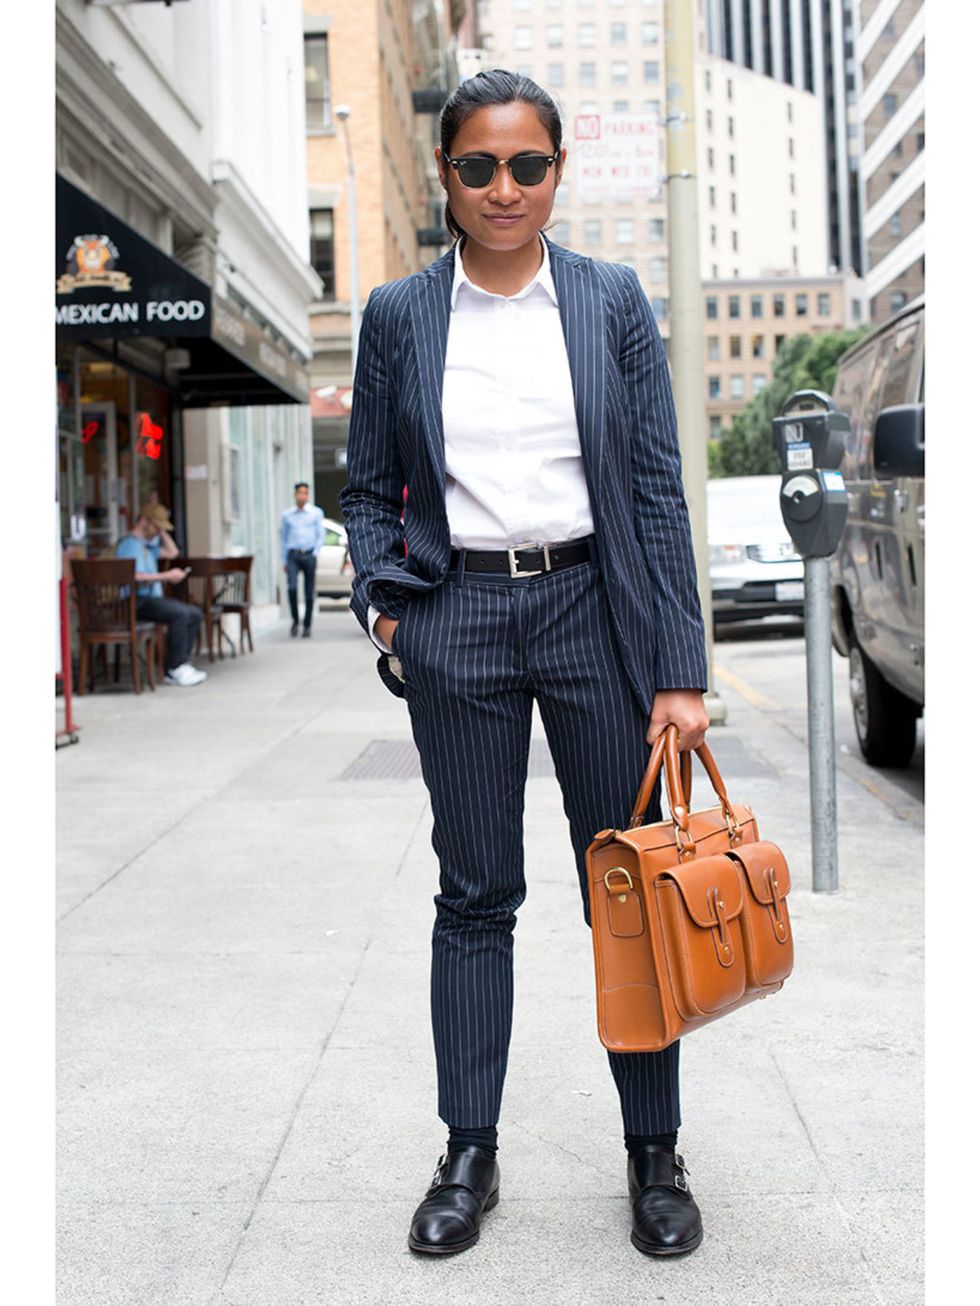 Cris Domingo wears Zara suit, Rolex watch, Ghurka bag, Brooks Brothers shoes, Rayban sunglasses and Target belt.